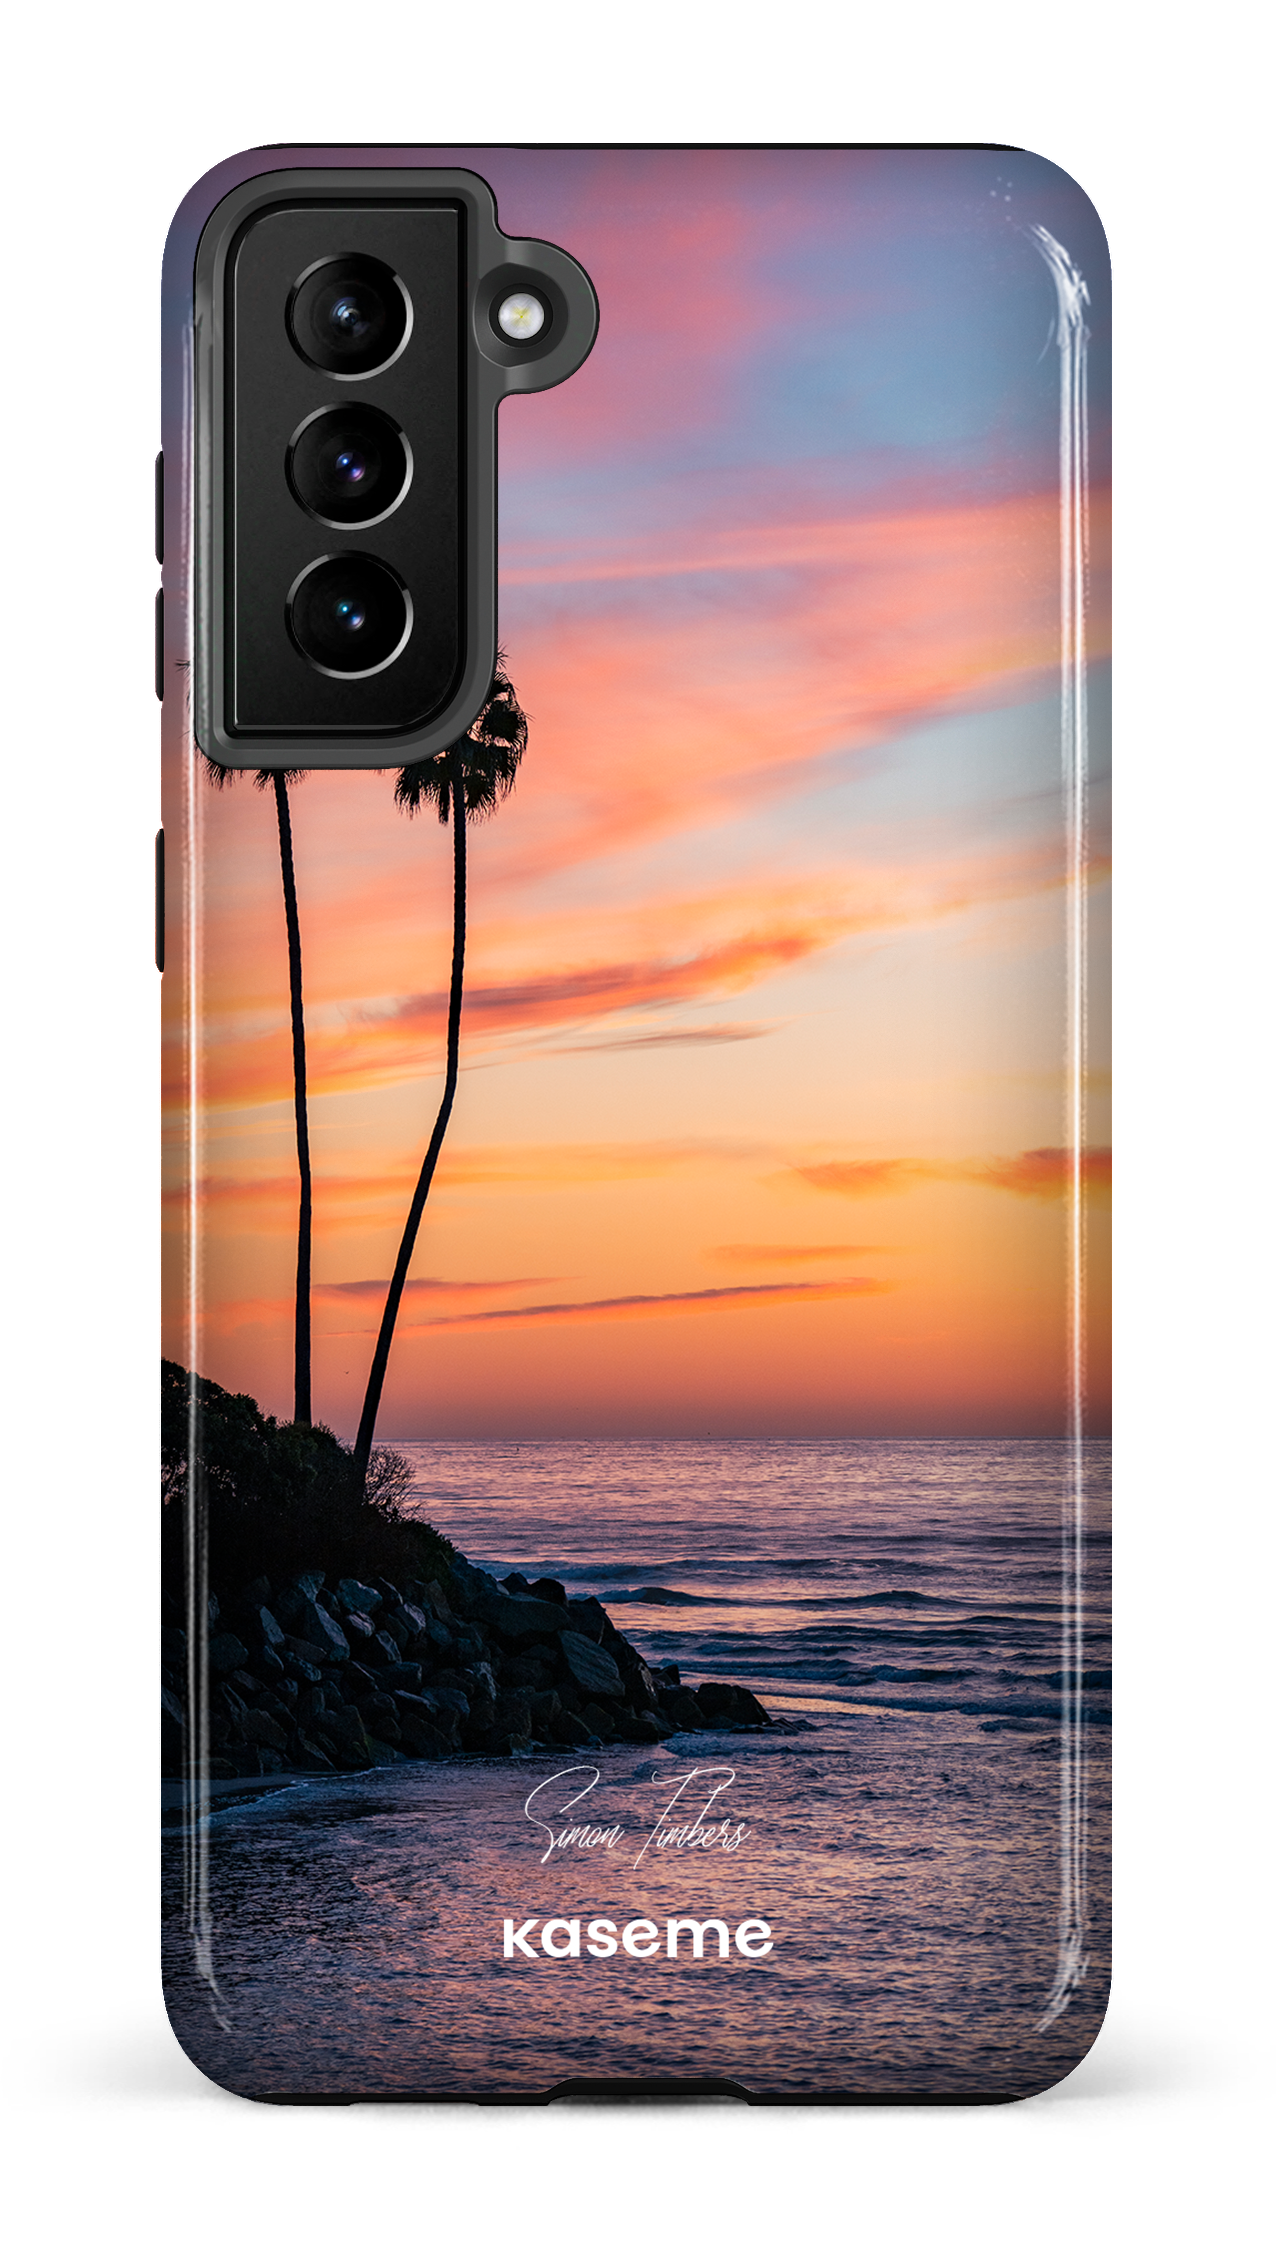 Sunset Palms by Simon Timbers - Galaxy S21 Plus